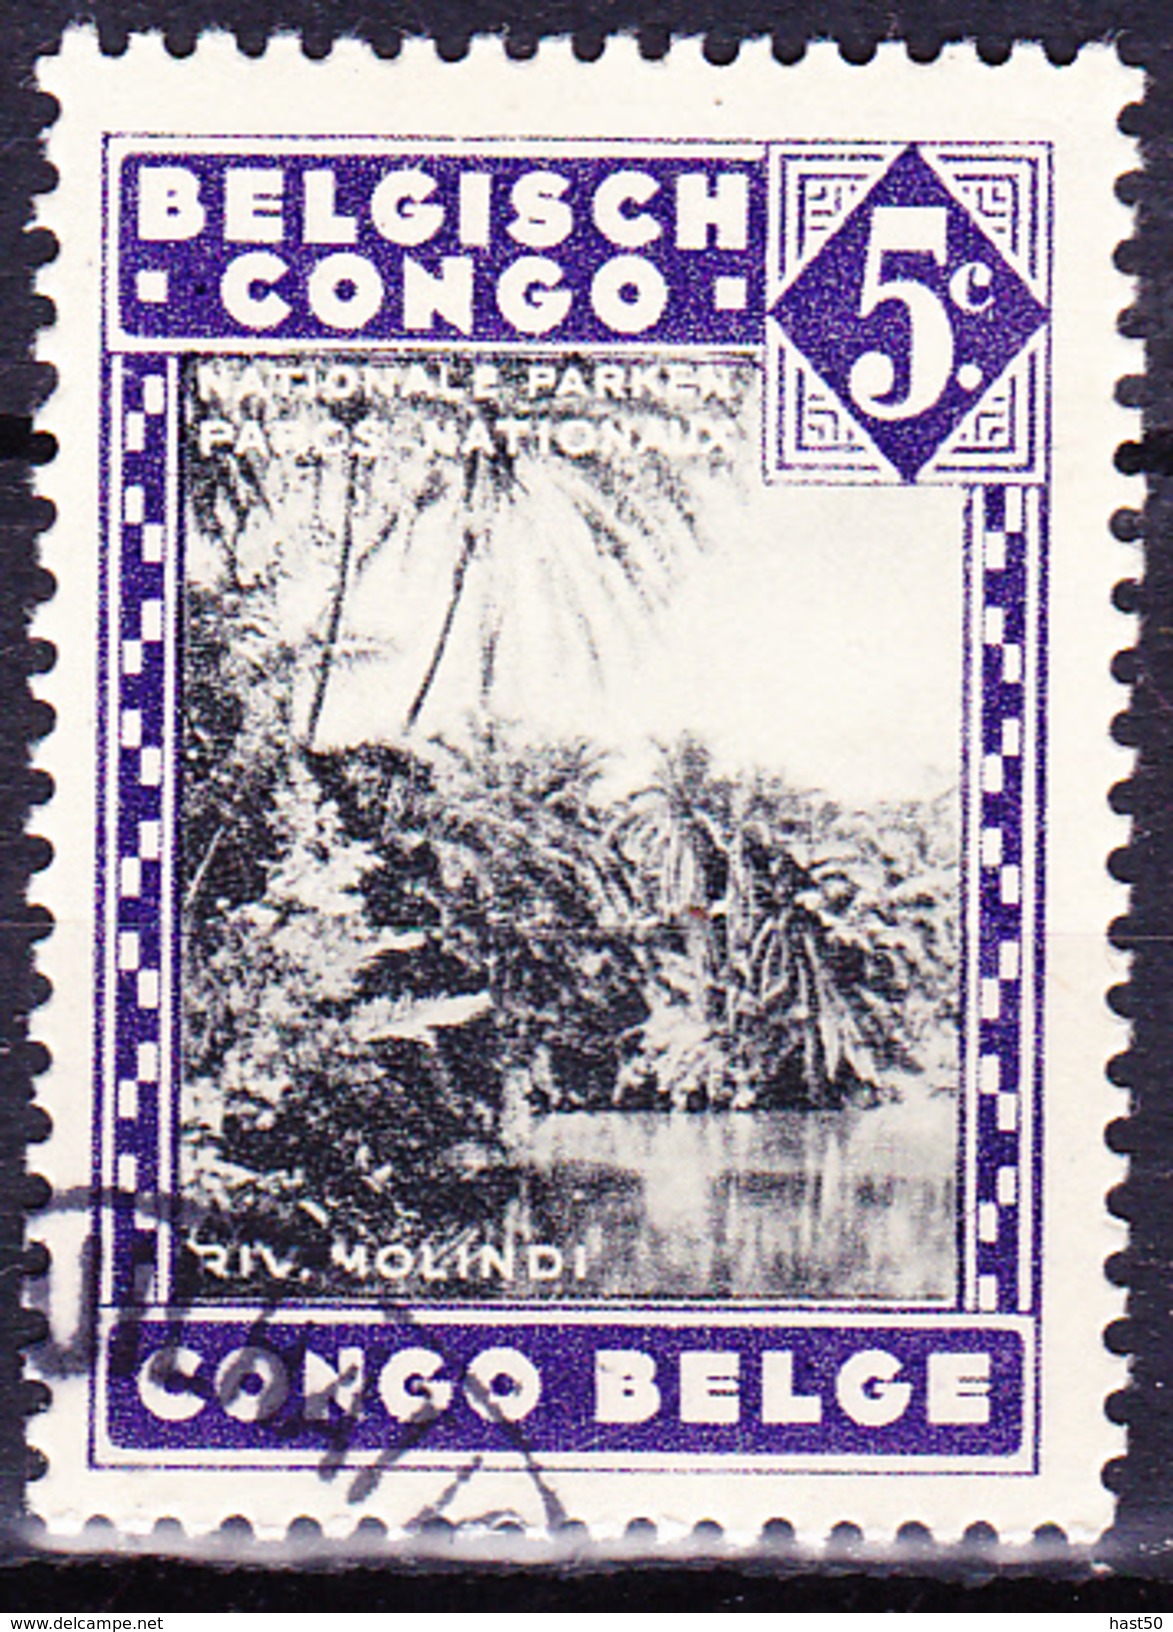 Belgisch-Congo Congo-Belge - Molindifluss/Molindi River (MiNr: 173) 1935 - Gest. Used Obl. - Gebraucht